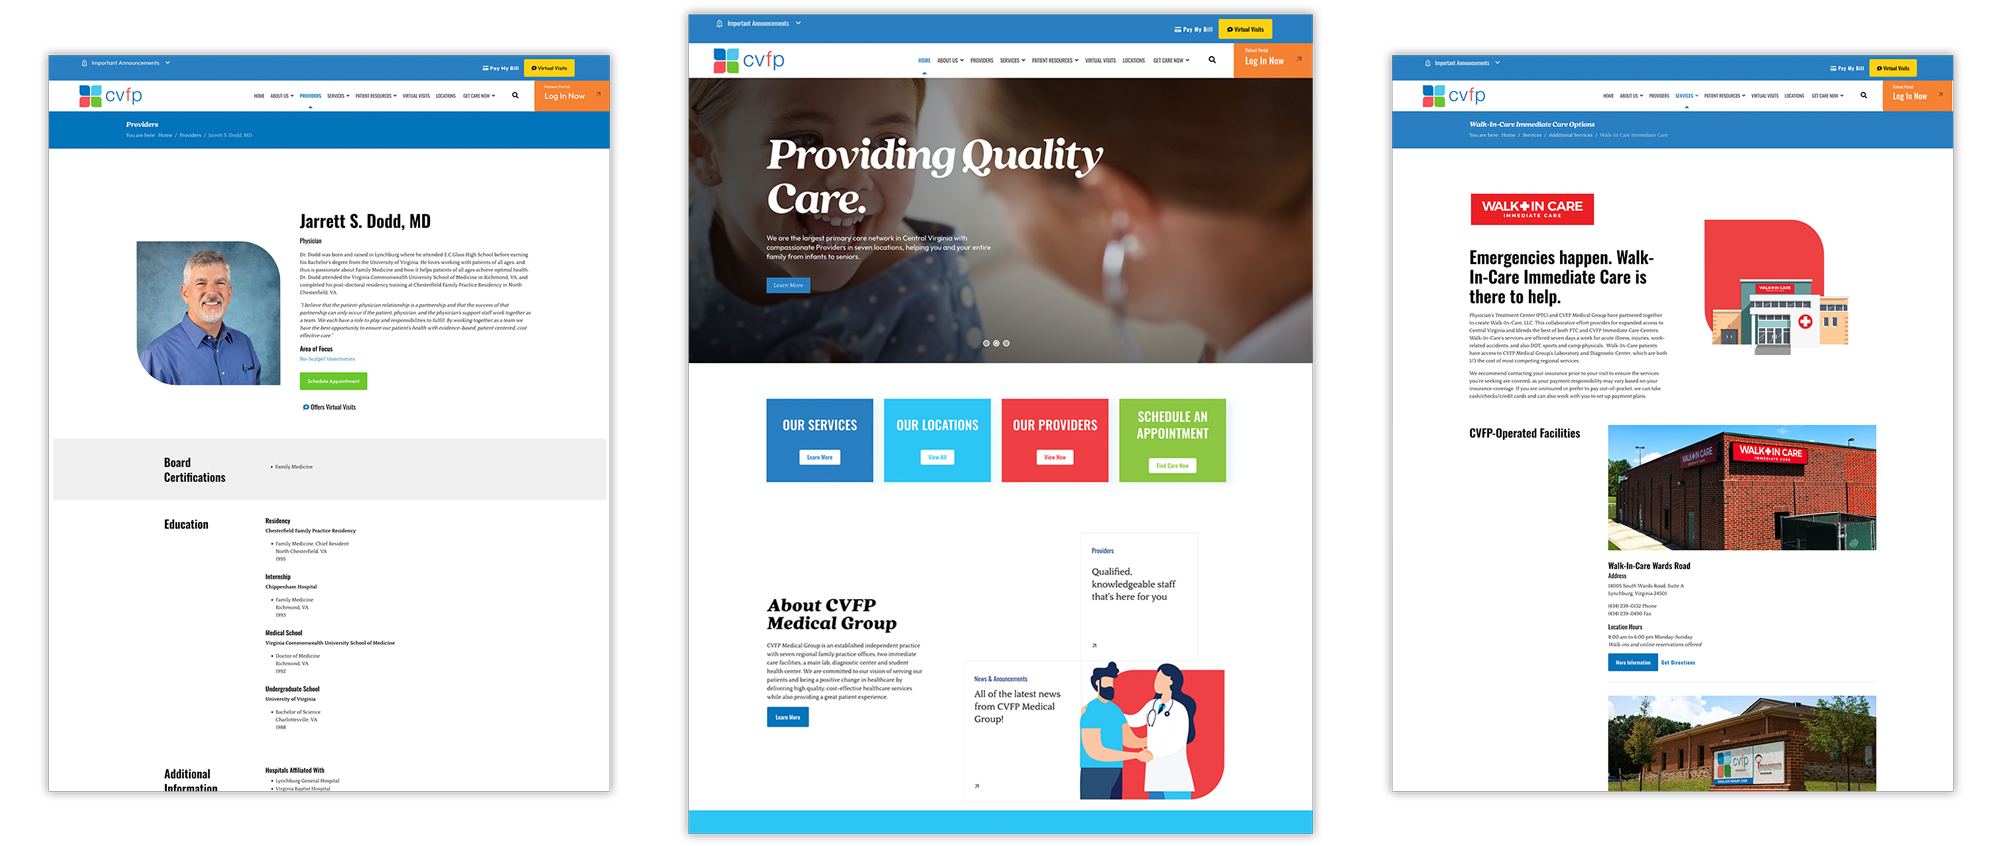 cvfp medical group healthcare website design services stimulus advertising virginia web development